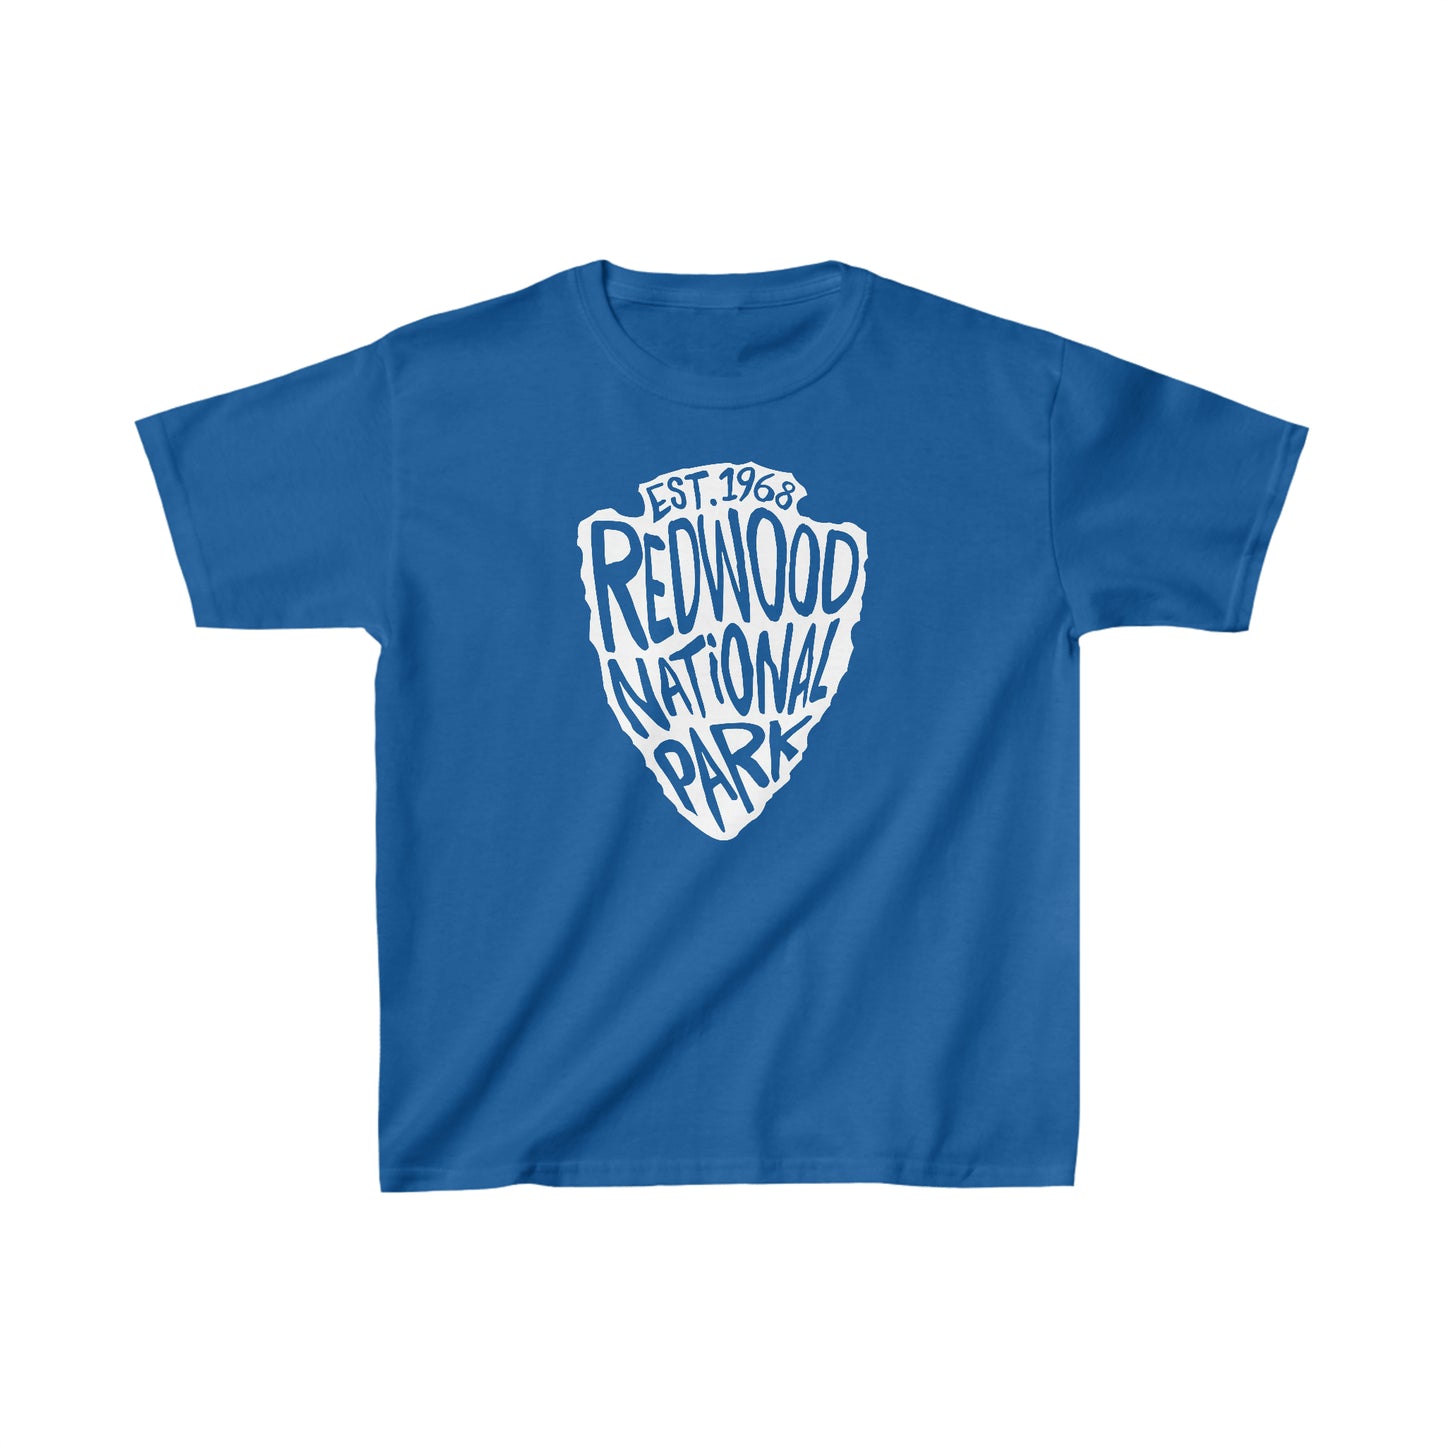 Redwood National Park Child T-Shirt - Arrowhead Design